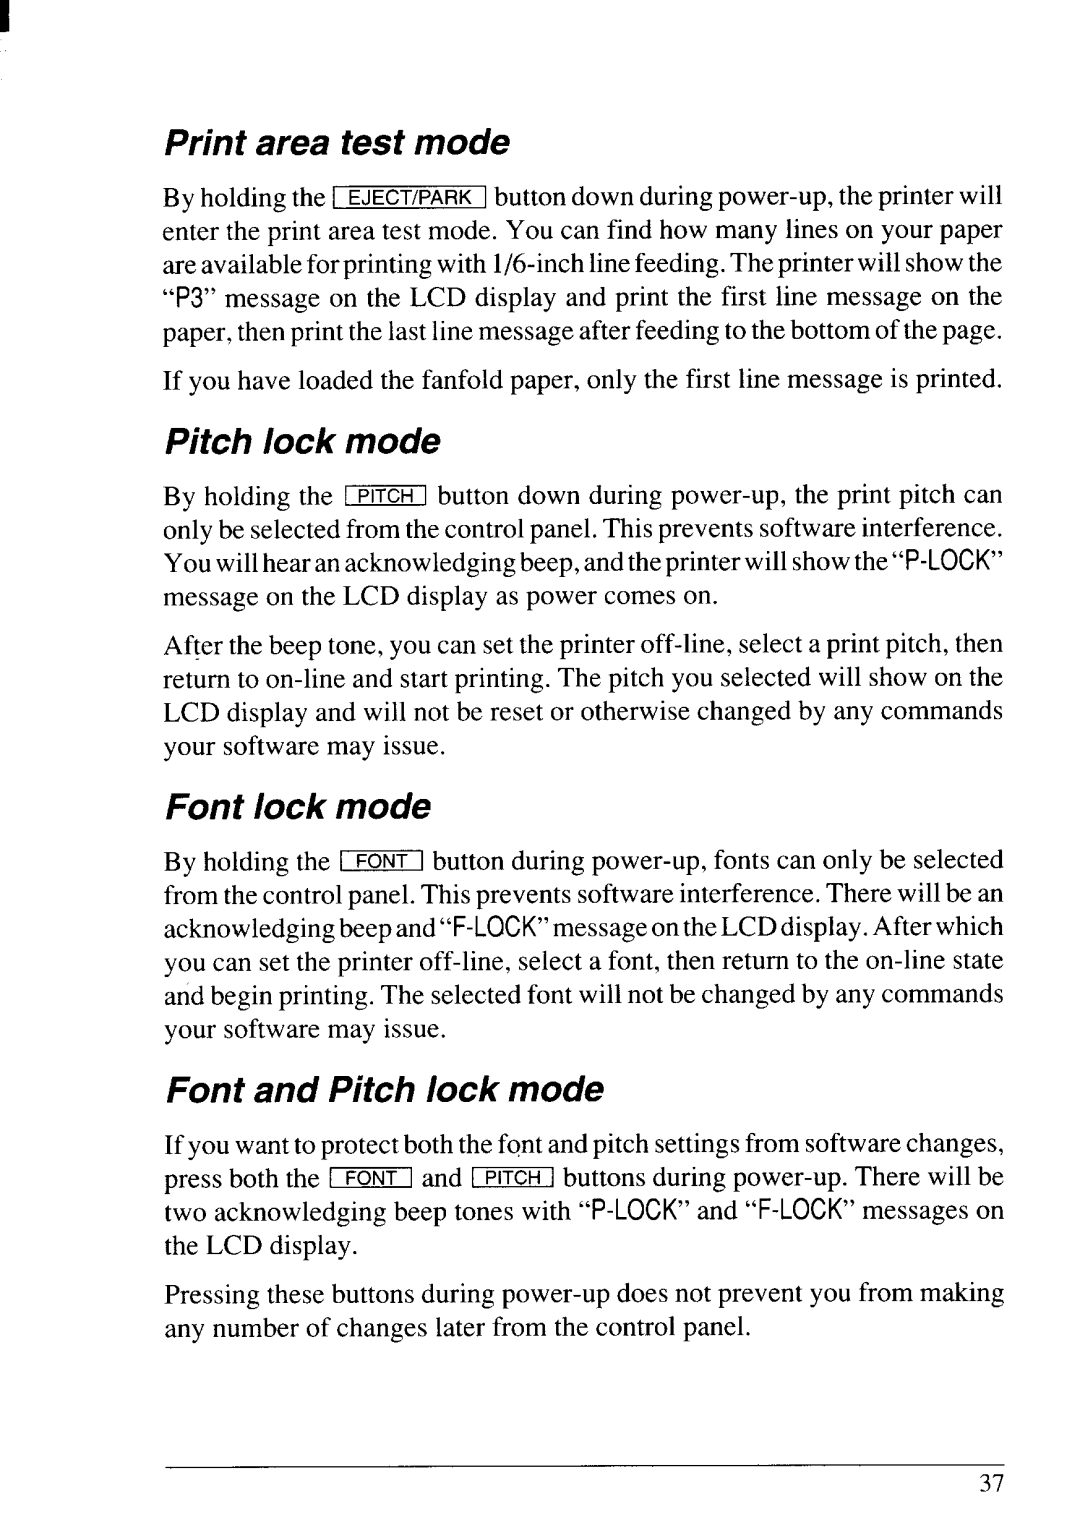 Star Micronics NX-2430 manual Print area test mode, Font lock mode, Font and Pitch lock mode 